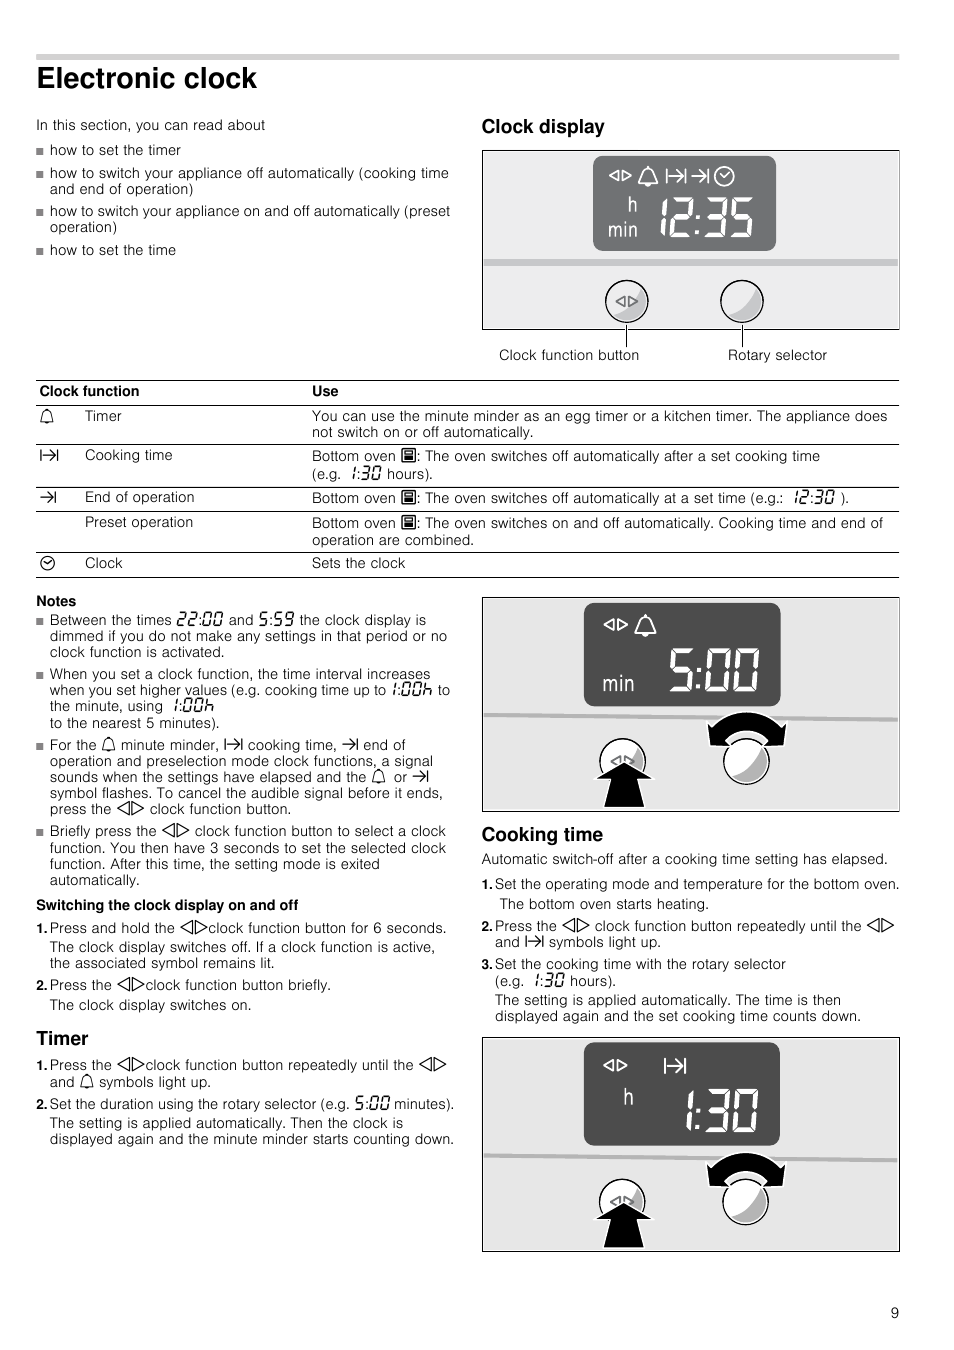 Electronic clock, Clock display, Notes | Neff U17S32N3GB User Manual | Page  9 / 24